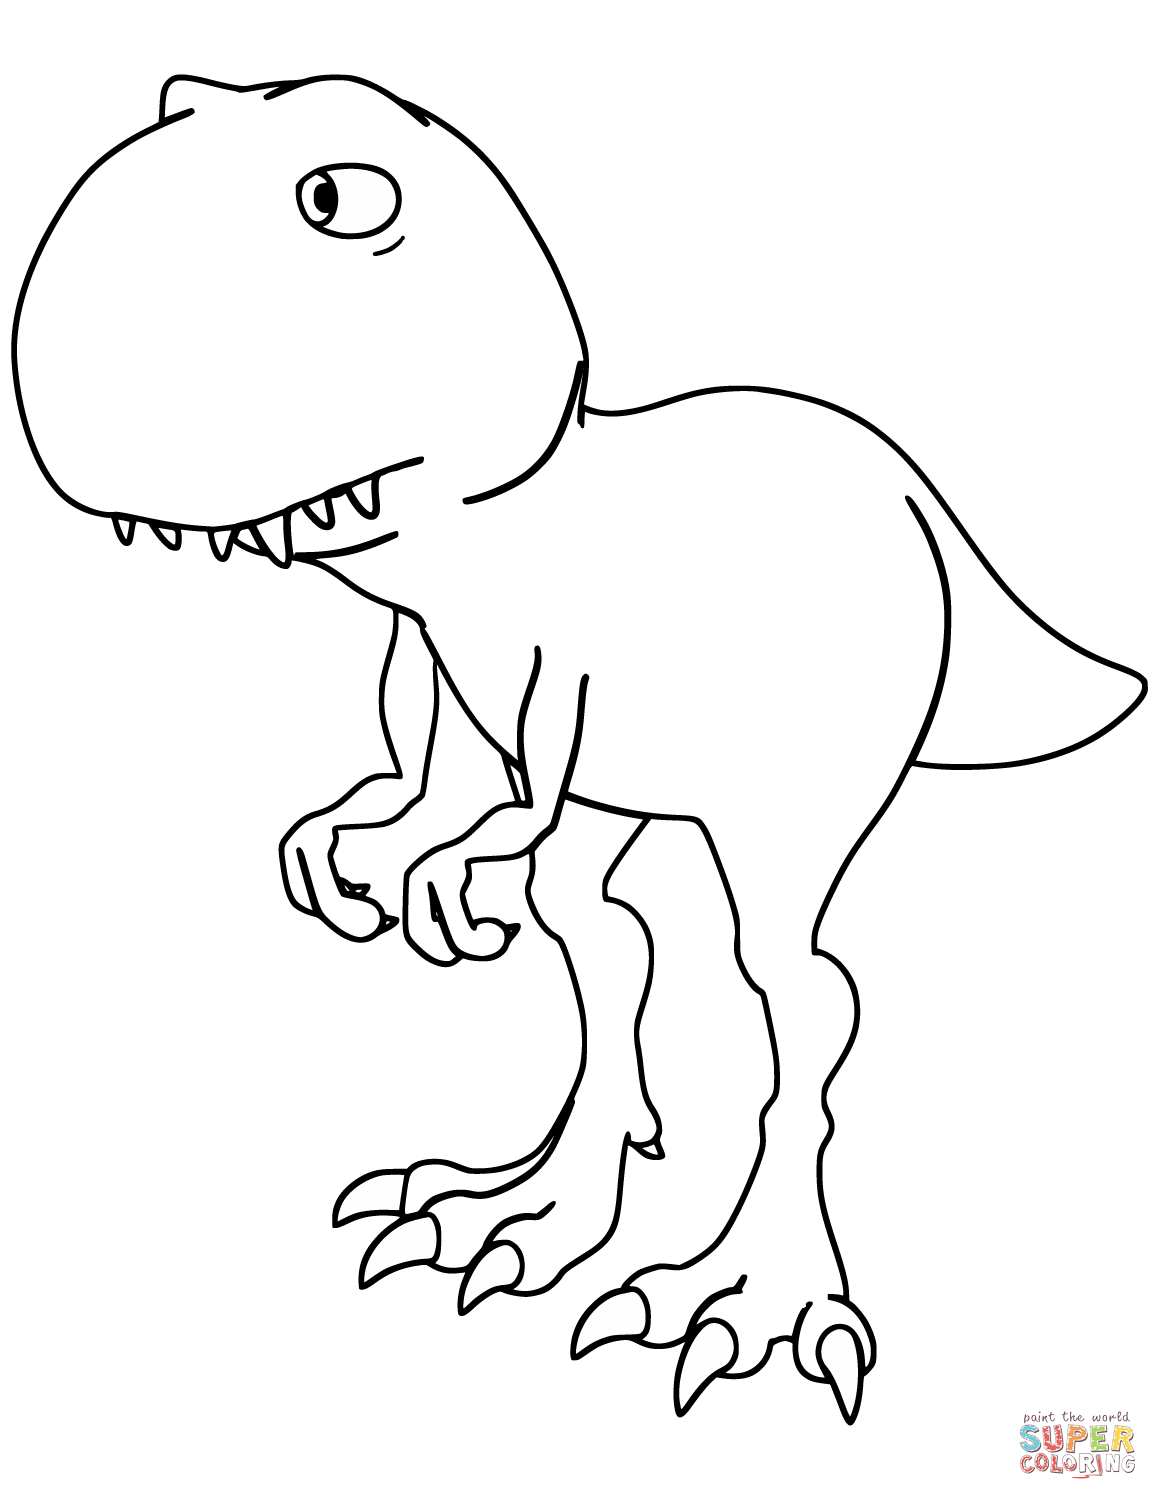 Cartoon Tyrannosaurus Rex coloring page | Free Printable Coloring Pages